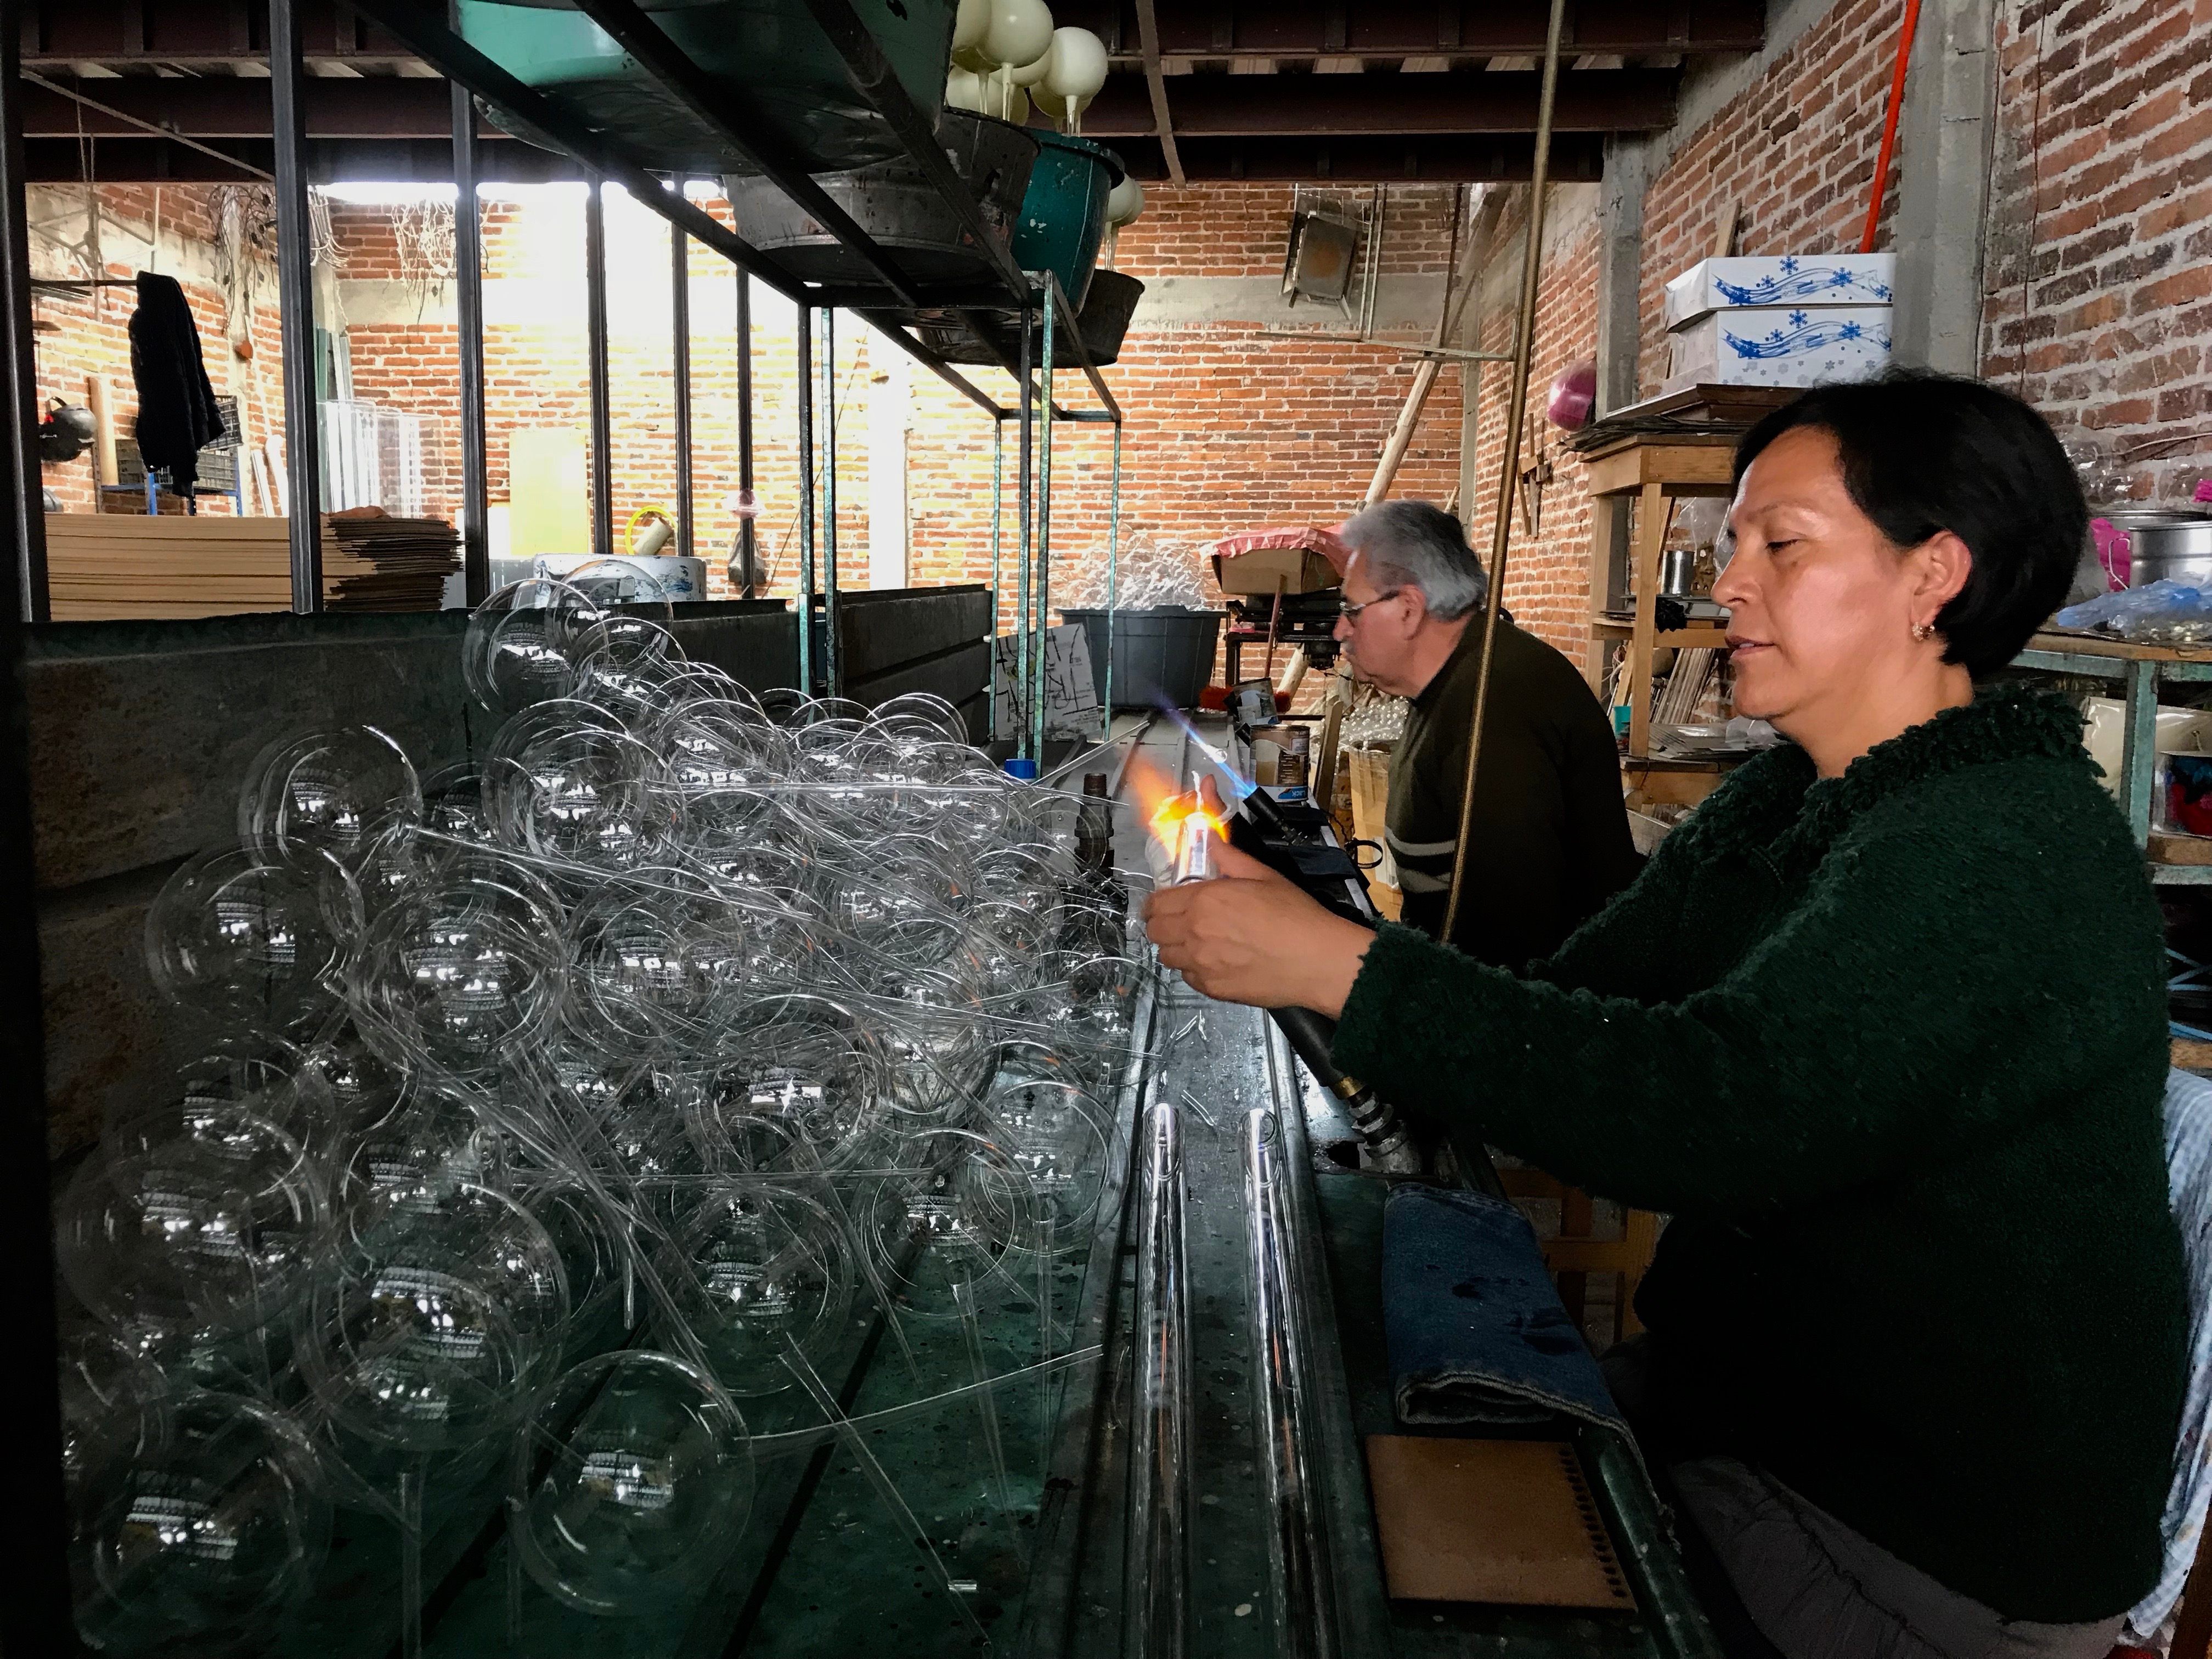 Blown Glass — Mexico1492